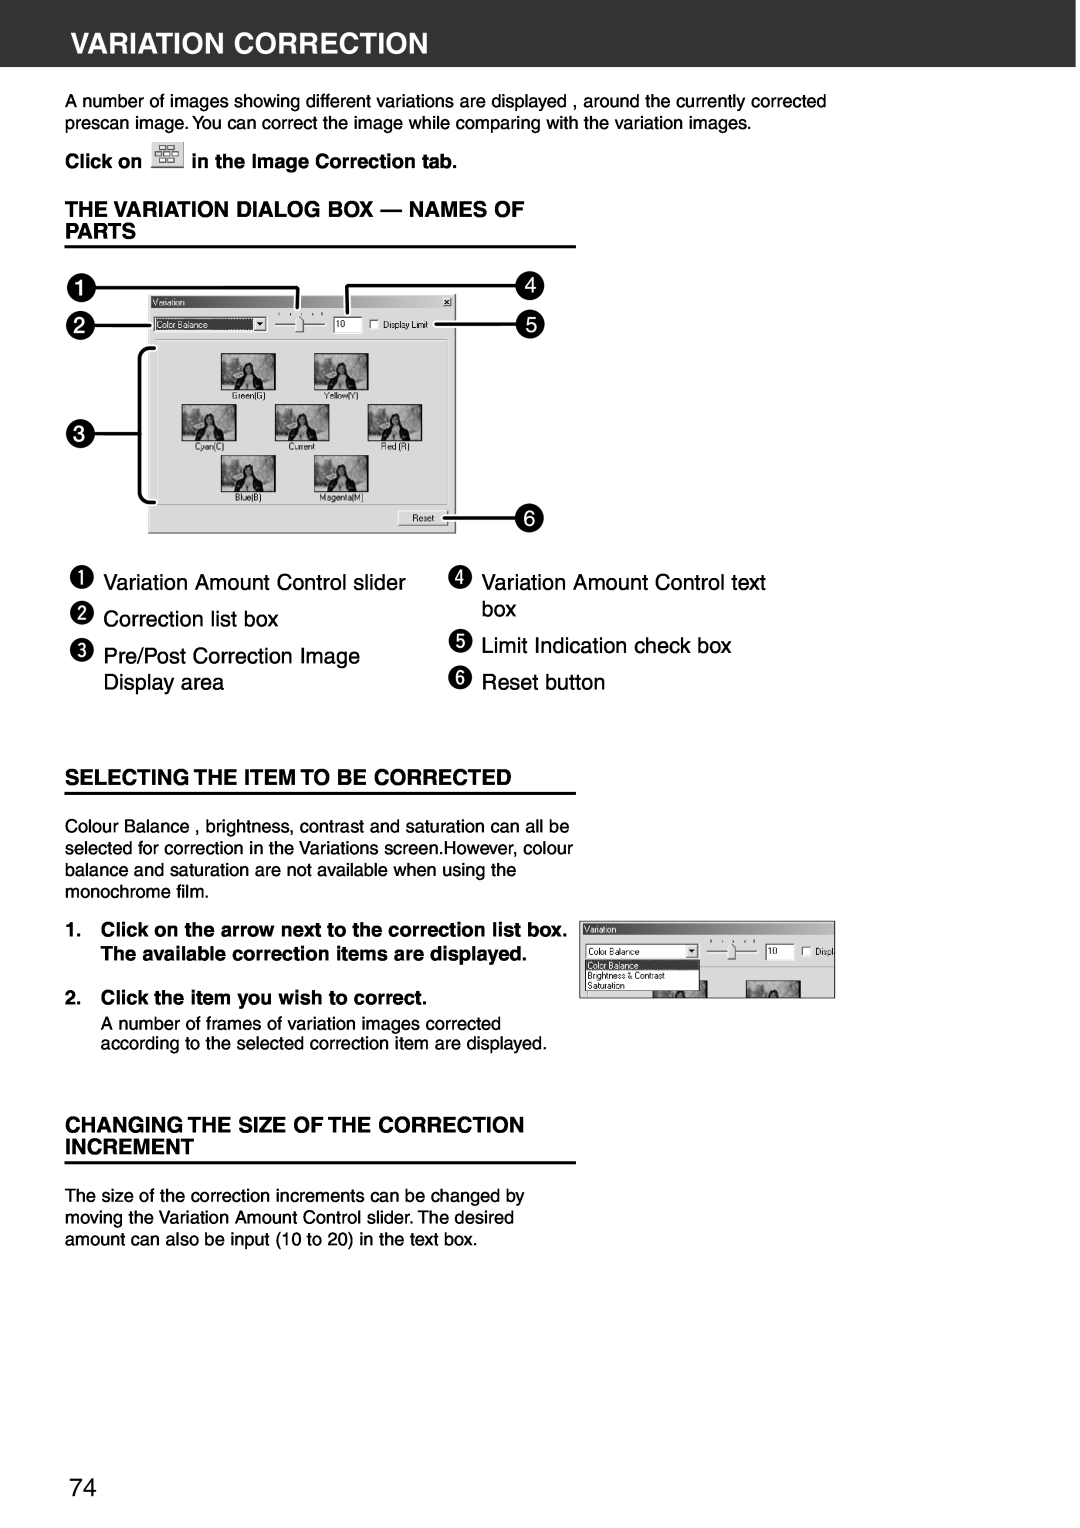 Konica Minolta Scan Multi PRO instruction manual Variation Correction, The Variation Dialog Box - Names Of Parts 